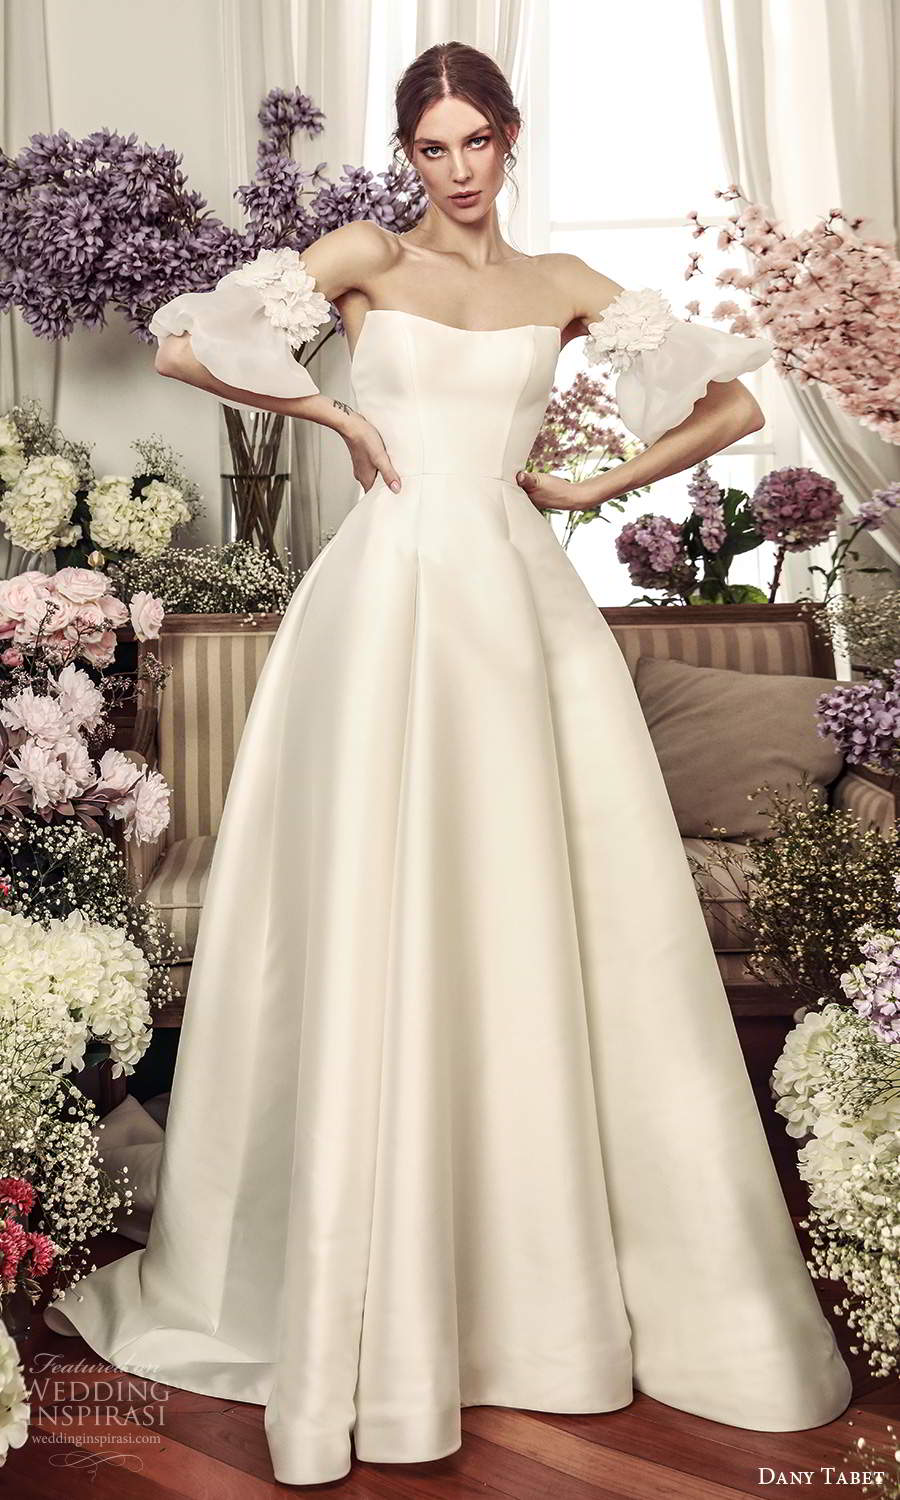 dany tabet 2021 belle fleur bridal short detached puff sleeves clean minimalist a line ball gown wedding dress chapel train (9) mv